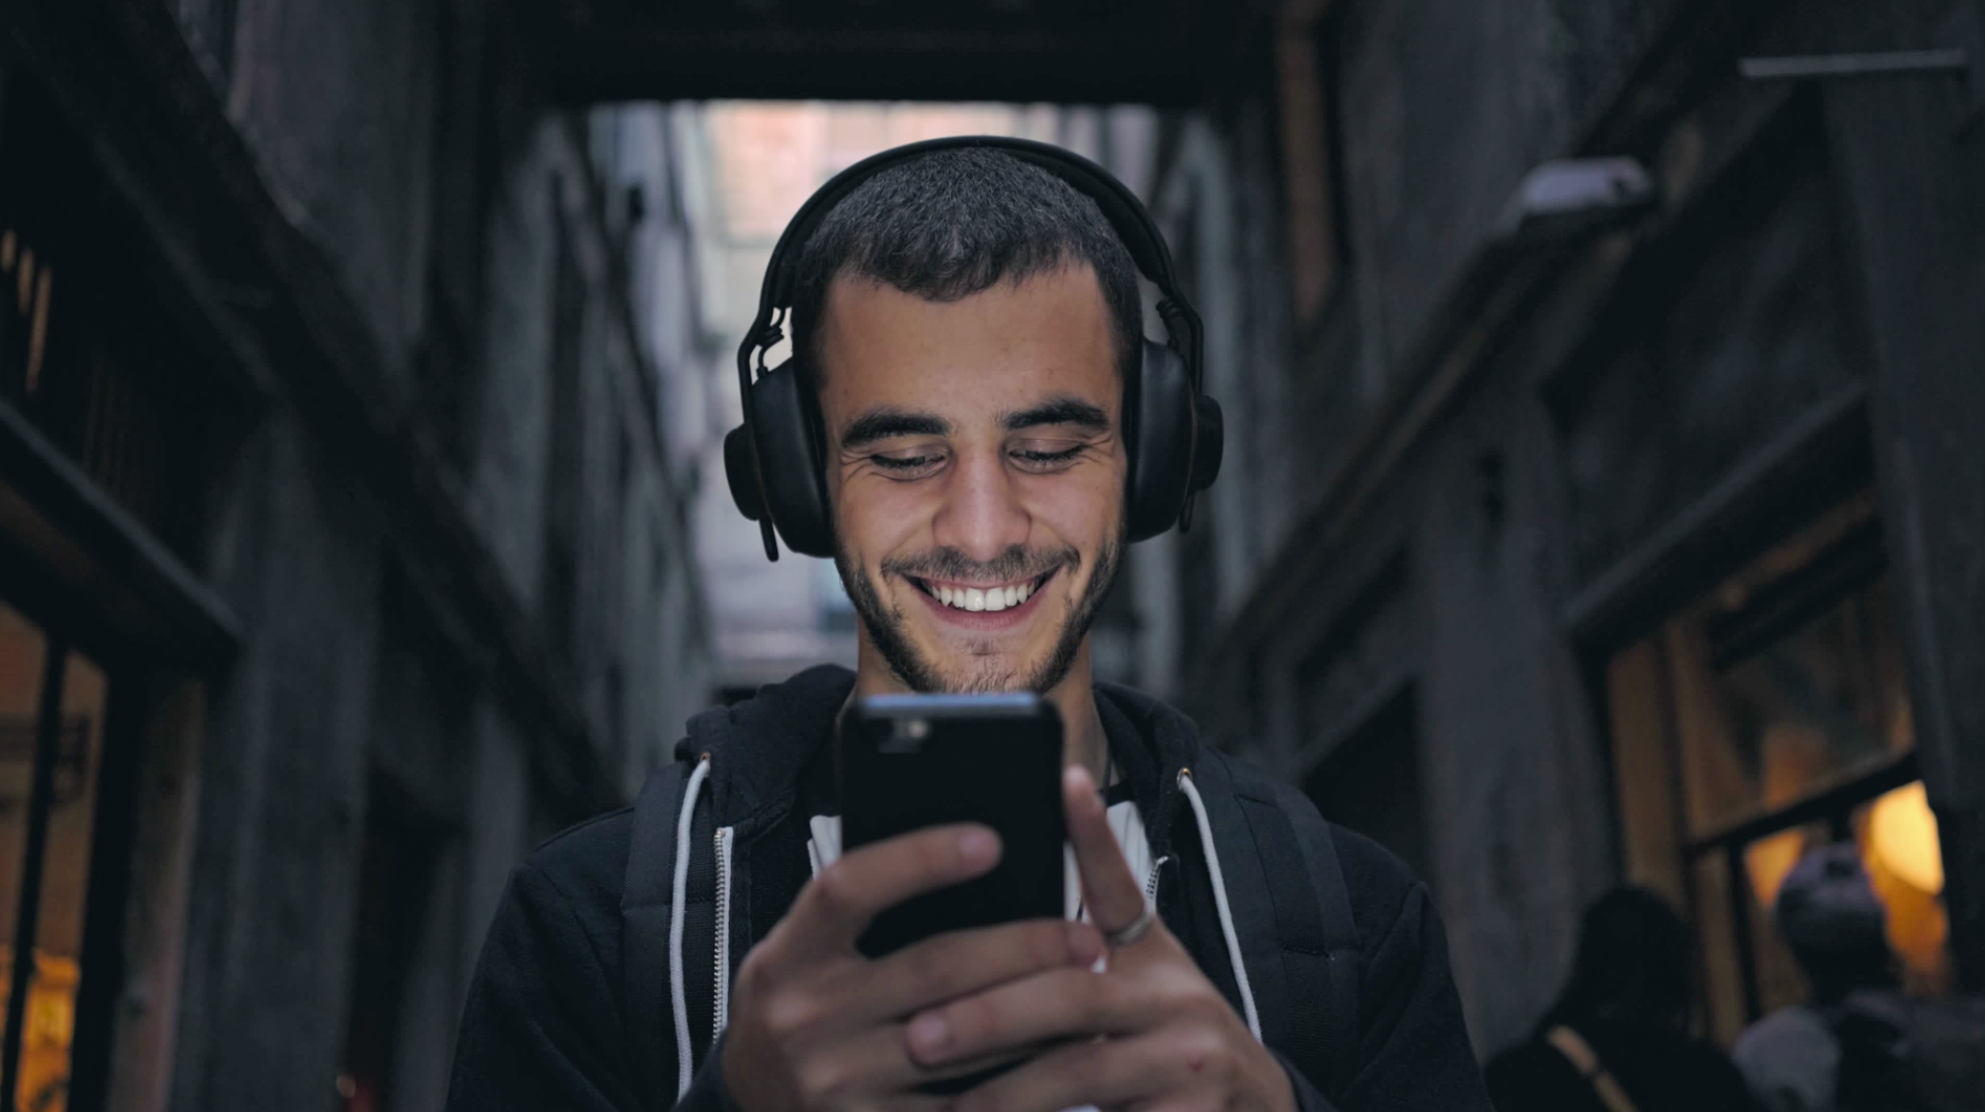 image of young man wearing headphones